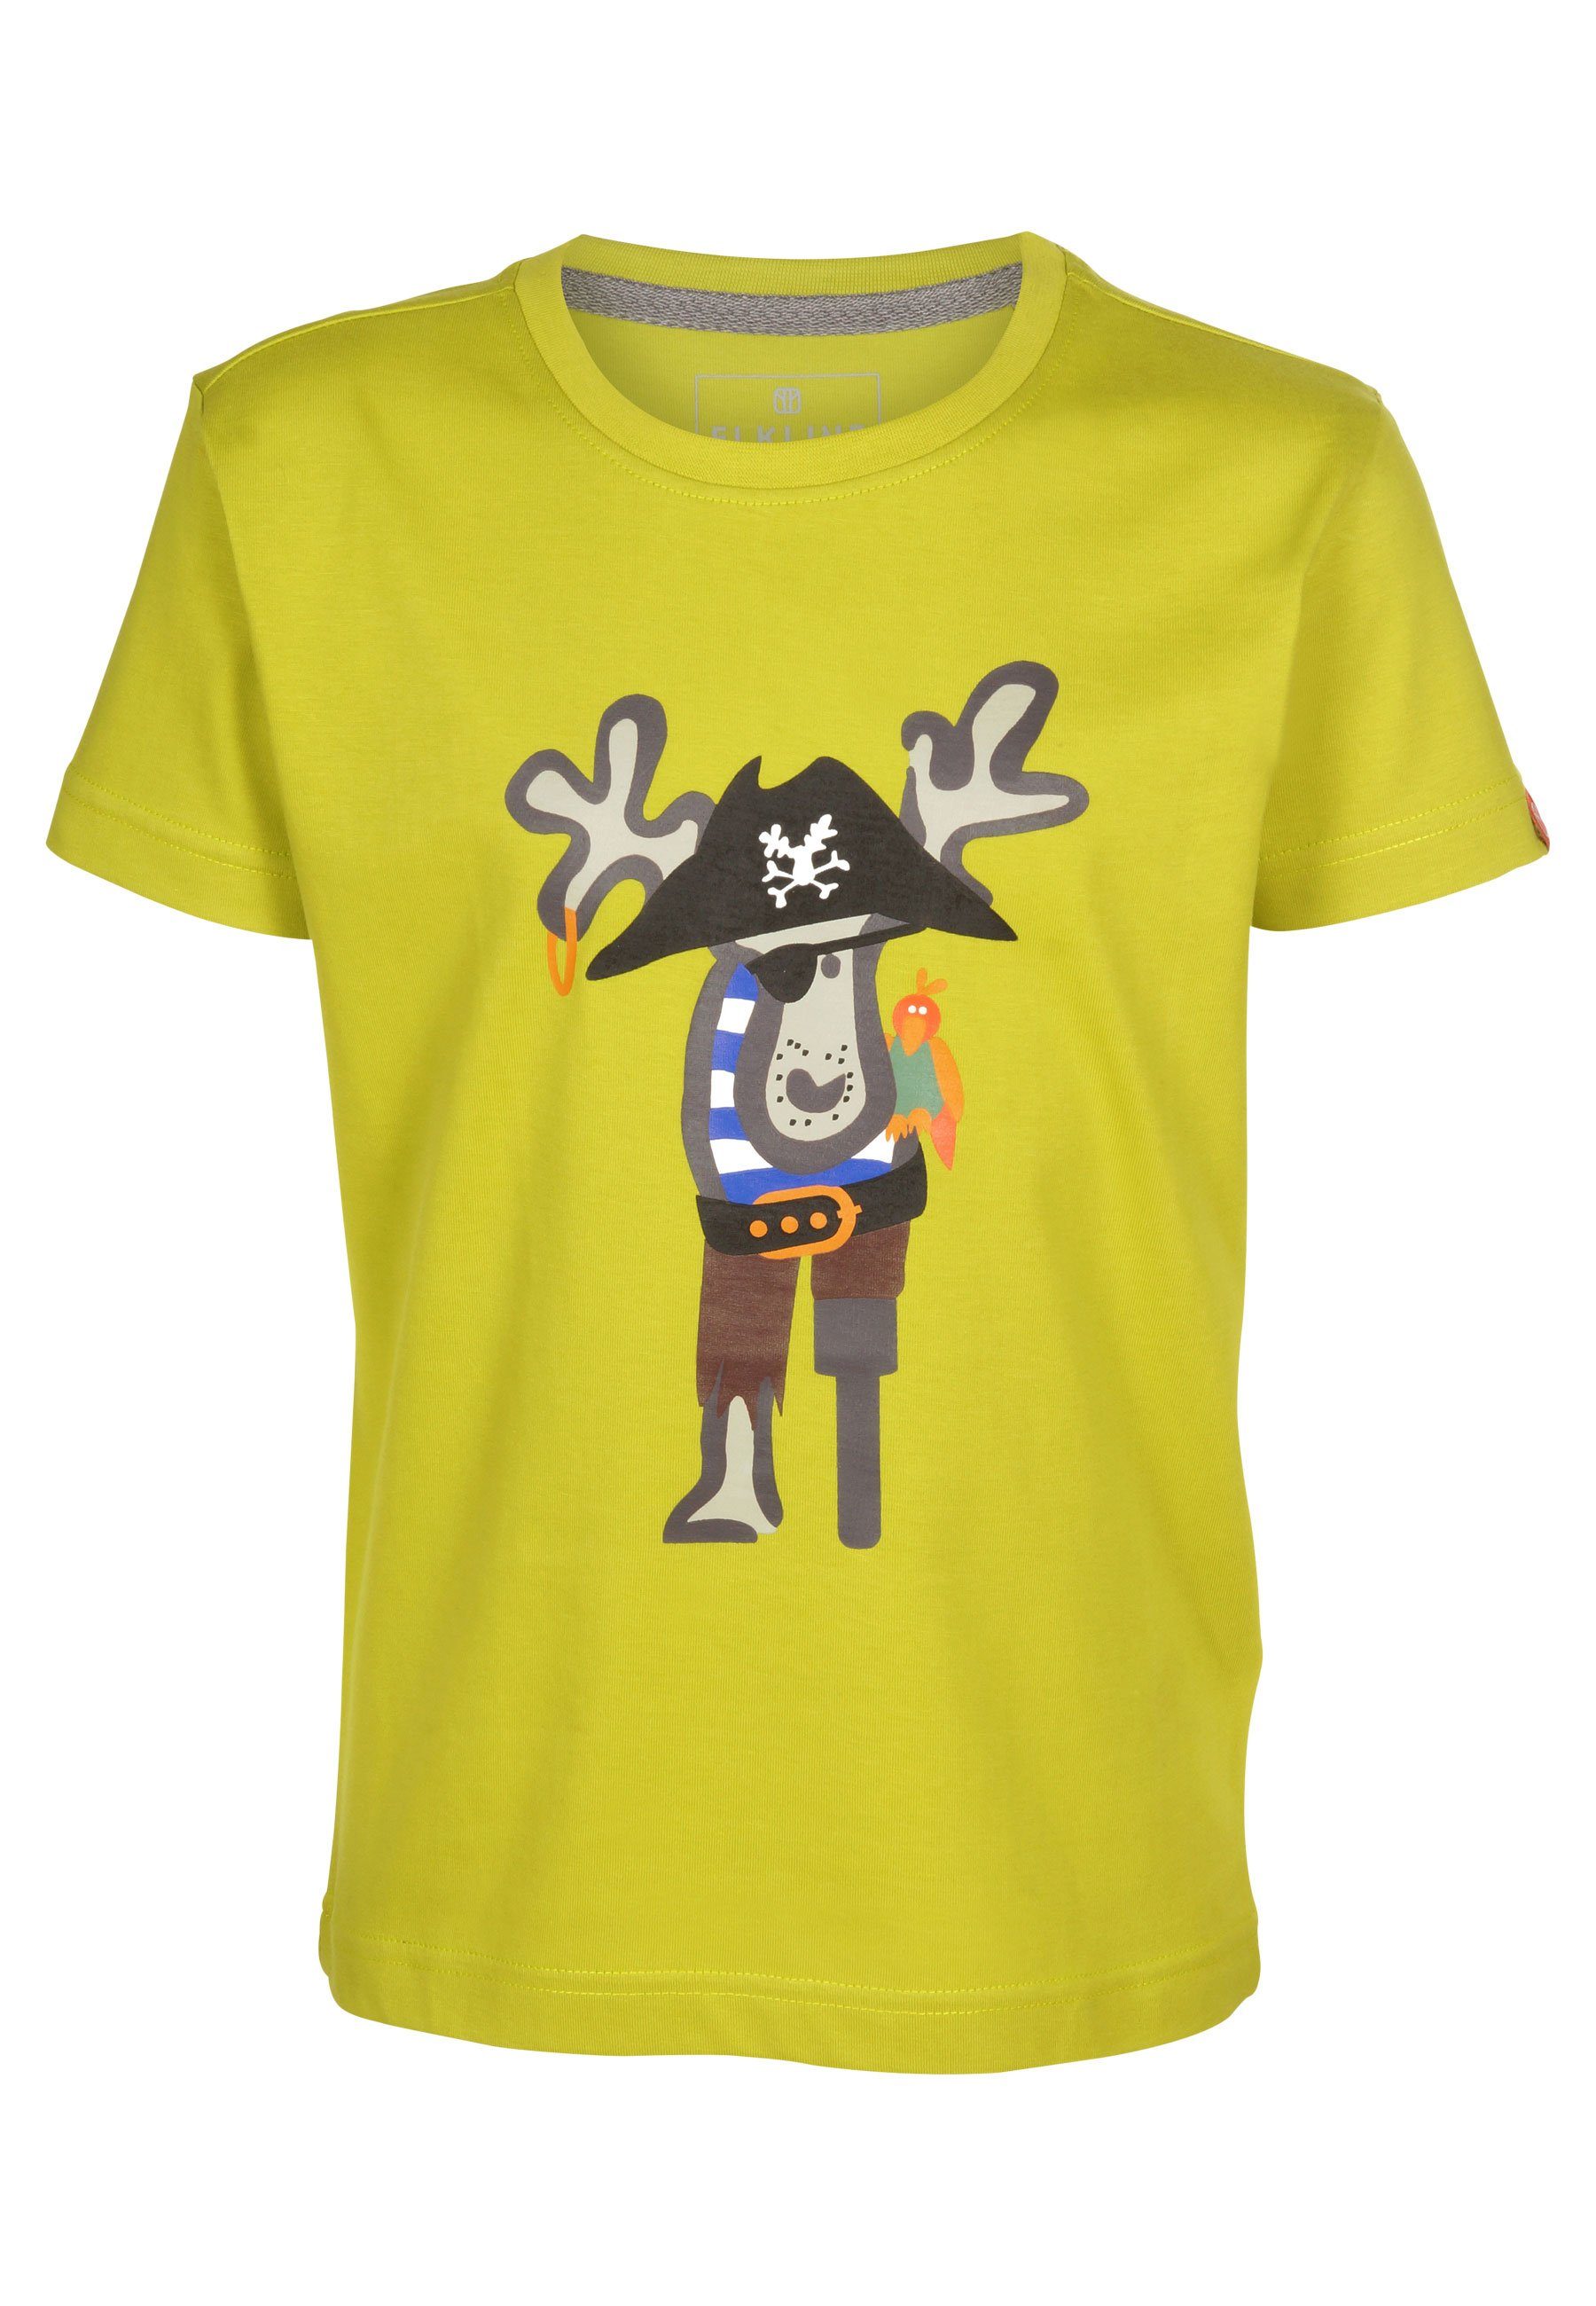 Elkline T-Shirt Messerjockel Elch Piraten Brust Print citronelle